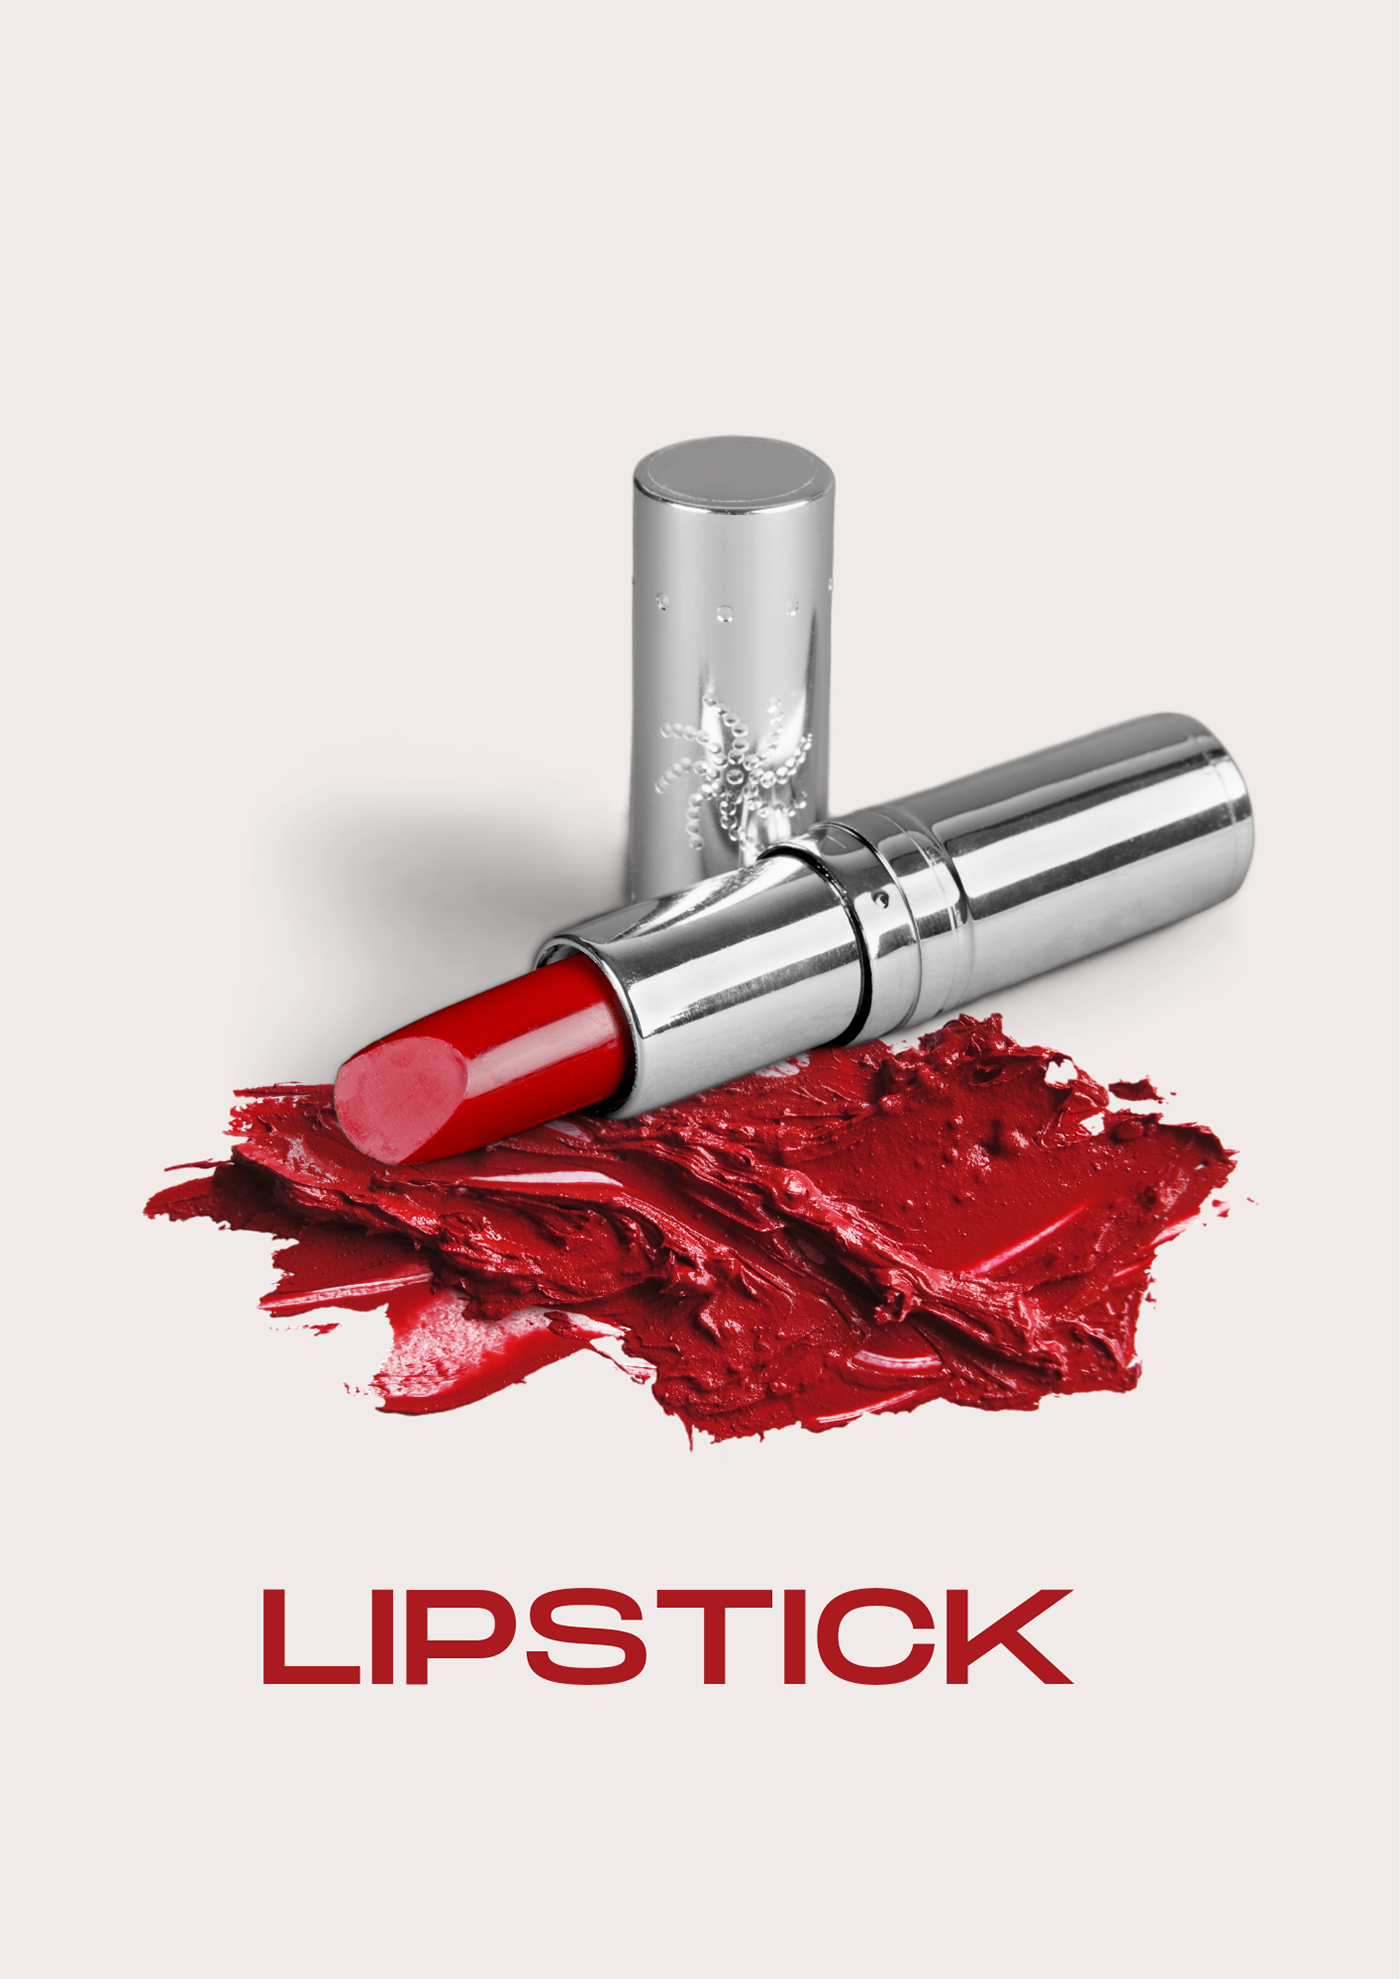 #Lipstick
#Red
#Shade